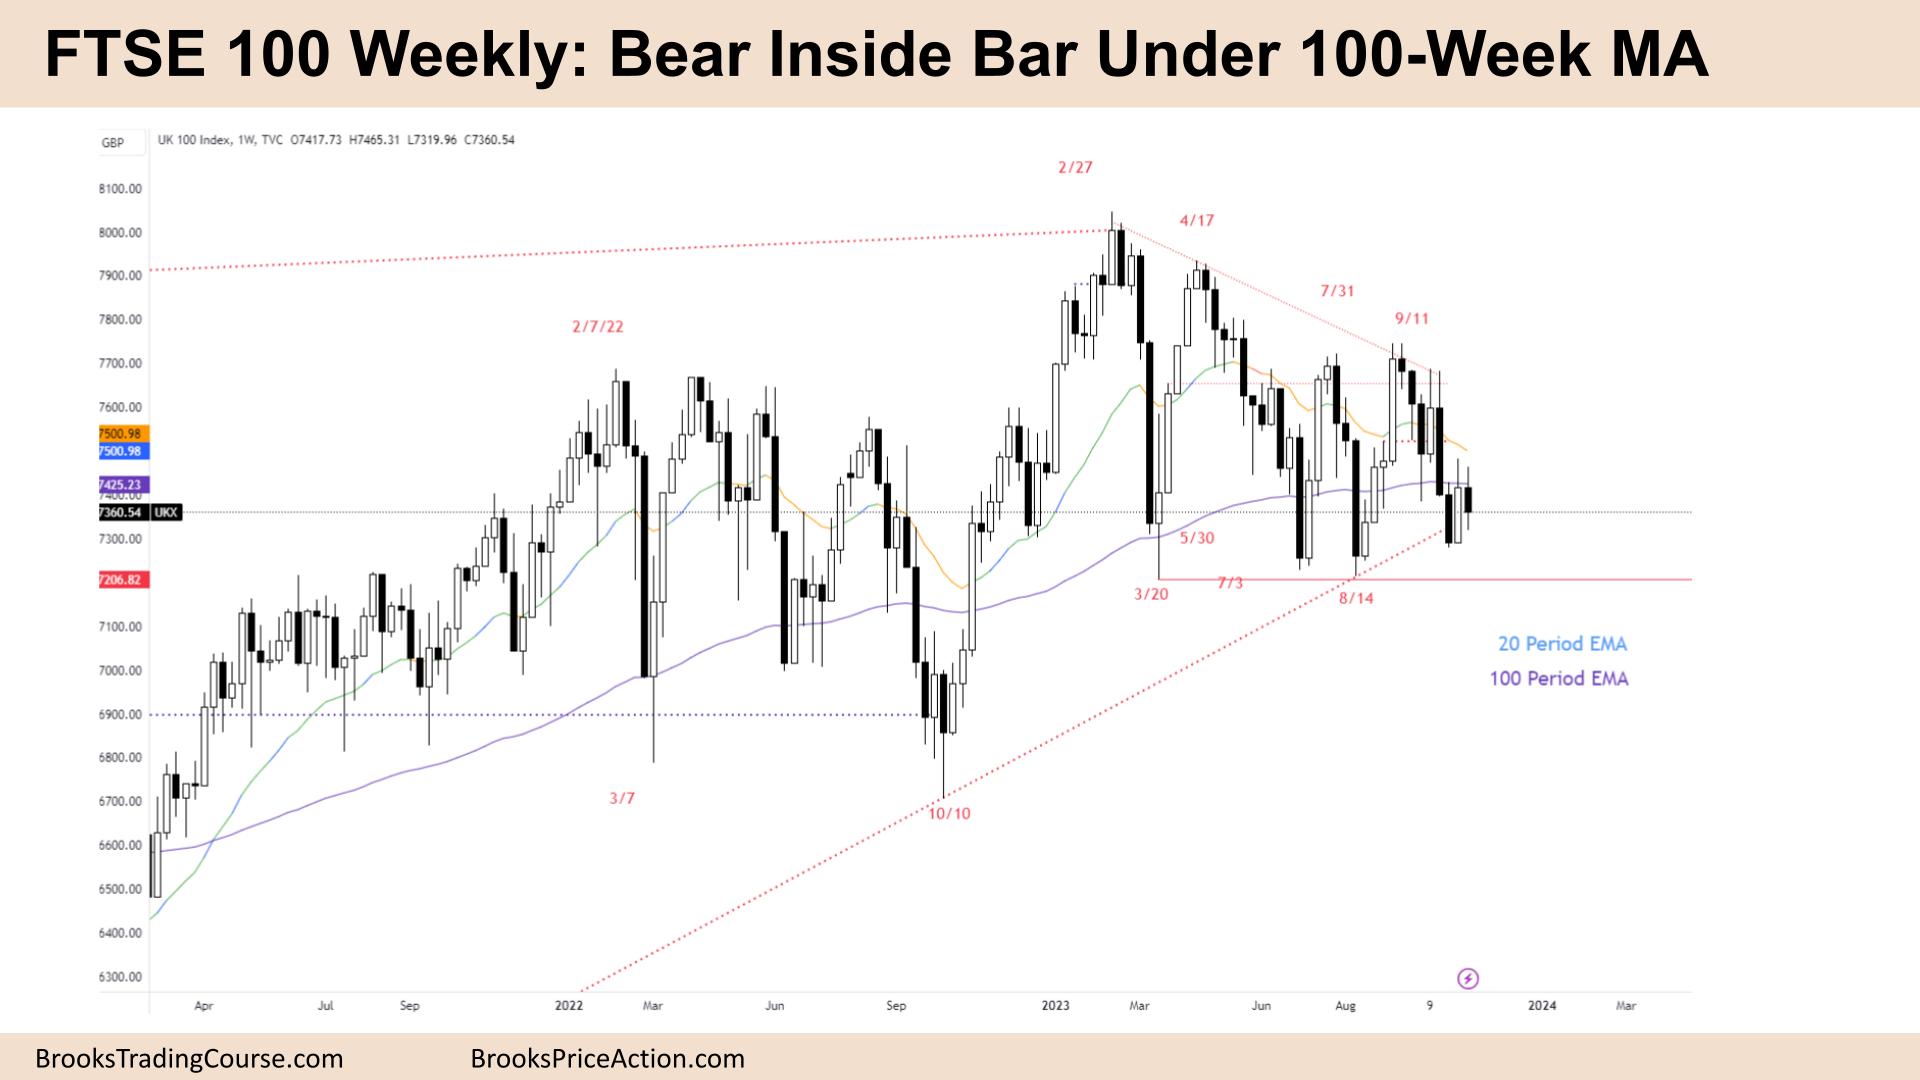 FTSE 100 Bear Inside Bar Under 100-Week MA